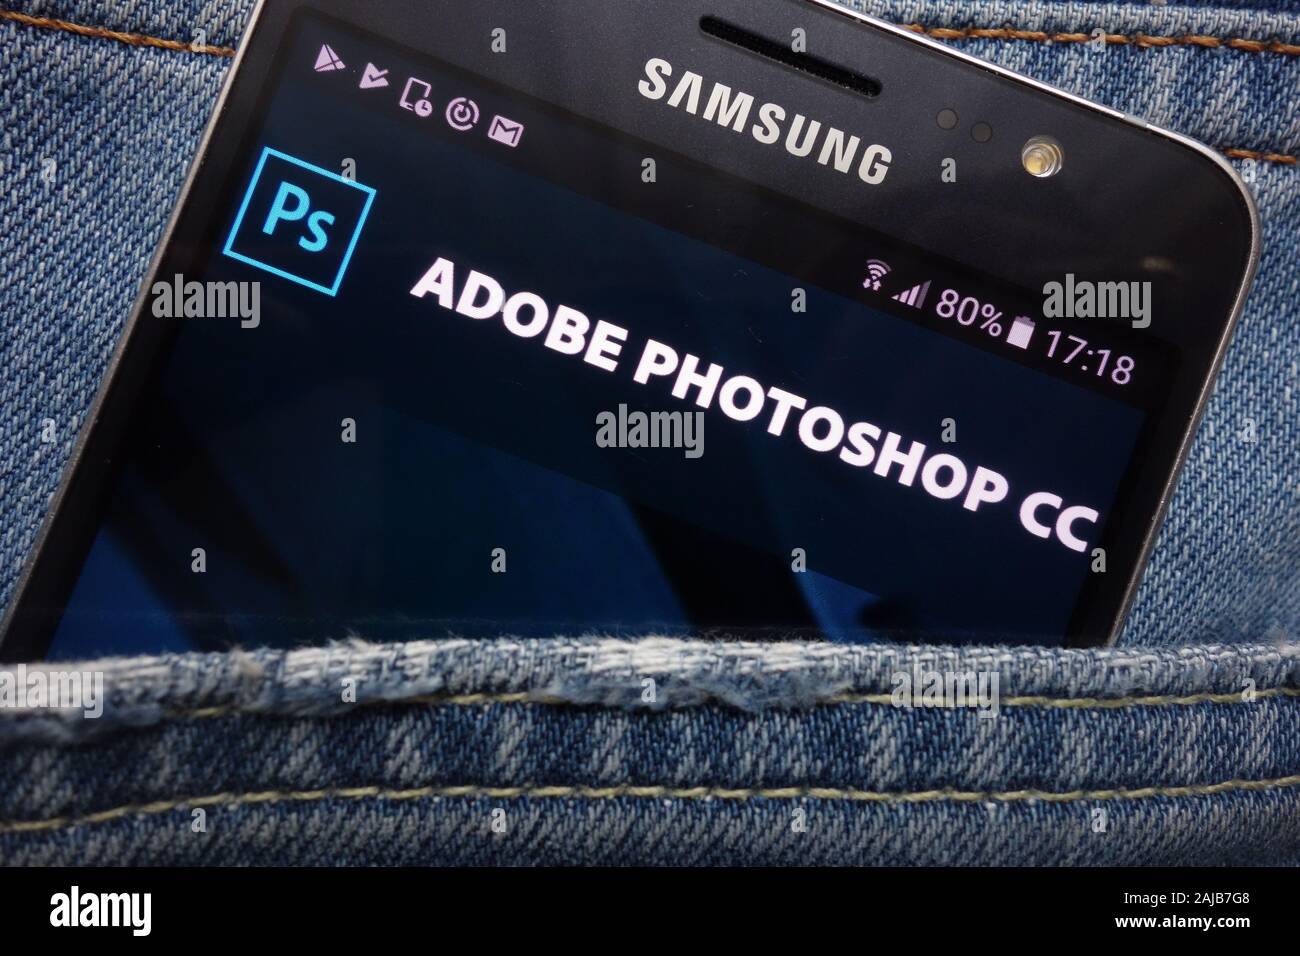 Adobe Photoshop website displayed on Samsung smartphone hidden in jeans pocket Stock Photo